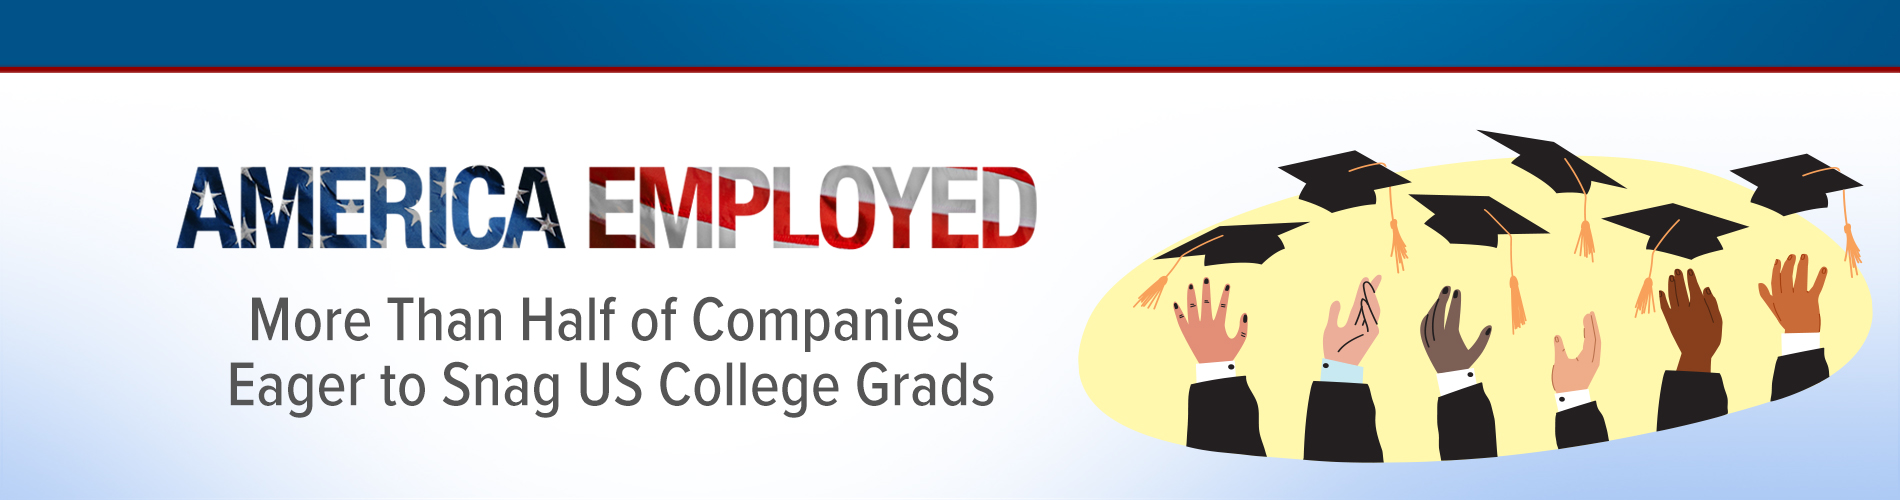 5-29-24 Hiring College Grads - America Employed